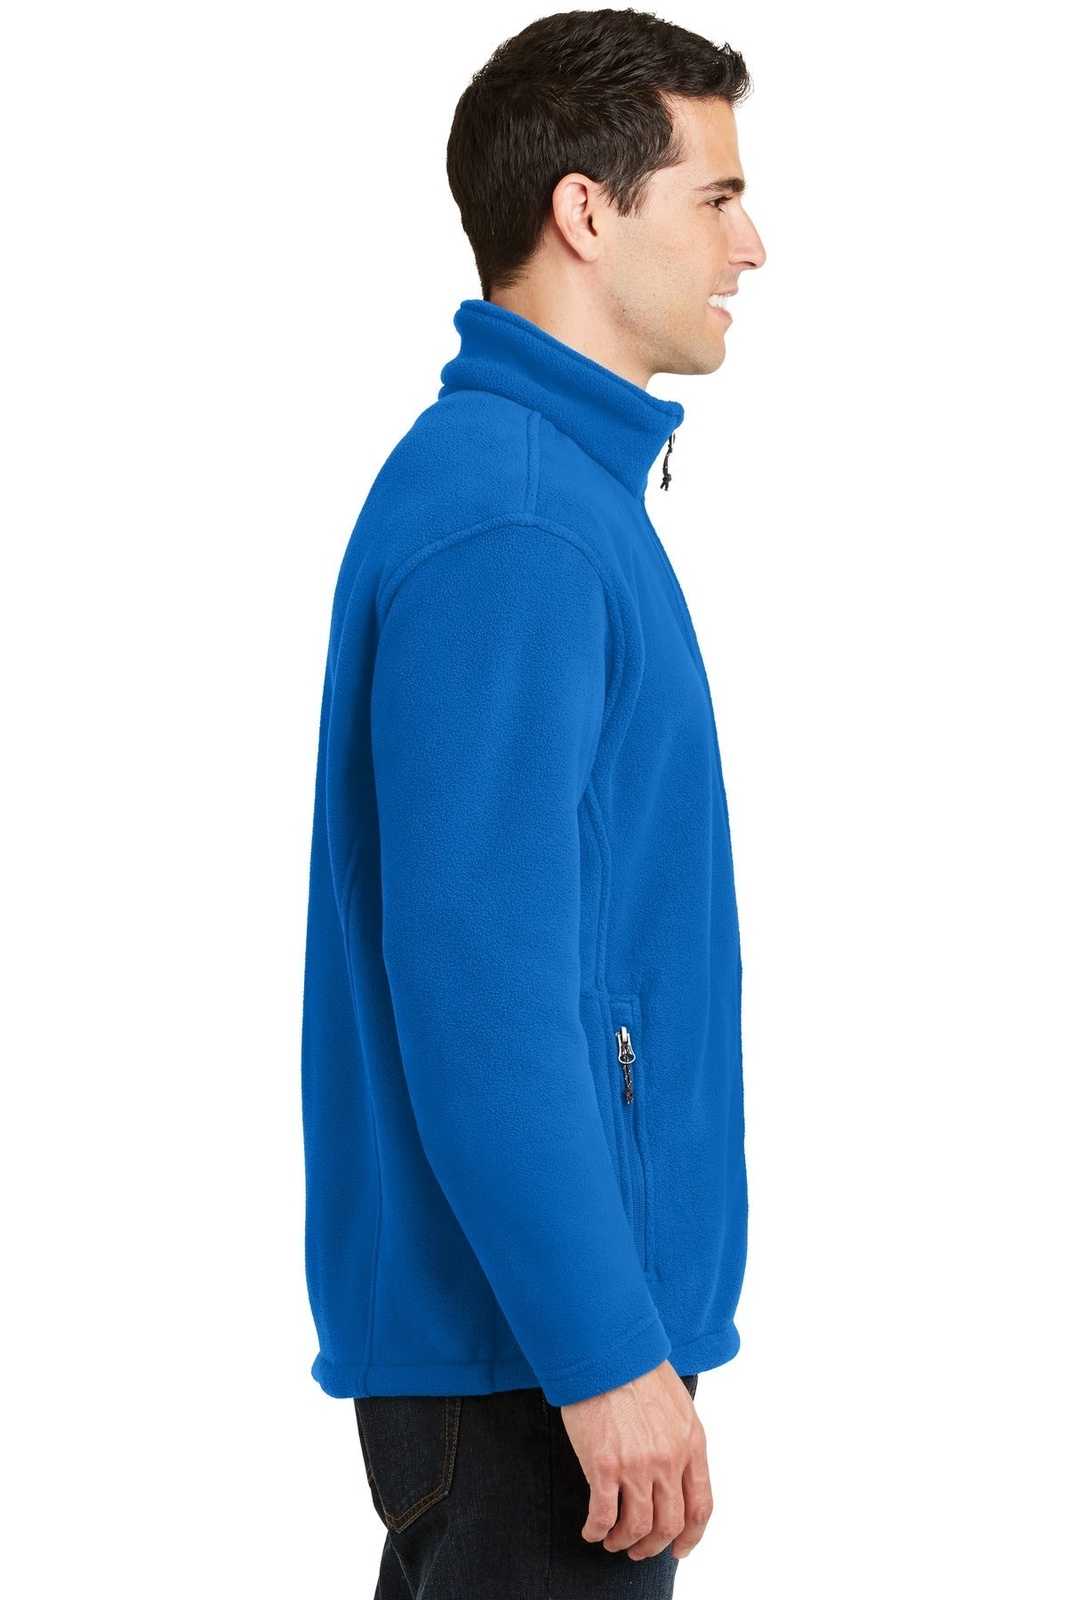 Port Authority F217 Value Fleece Jacket - Skydiver Blue - HIT a Double - 3